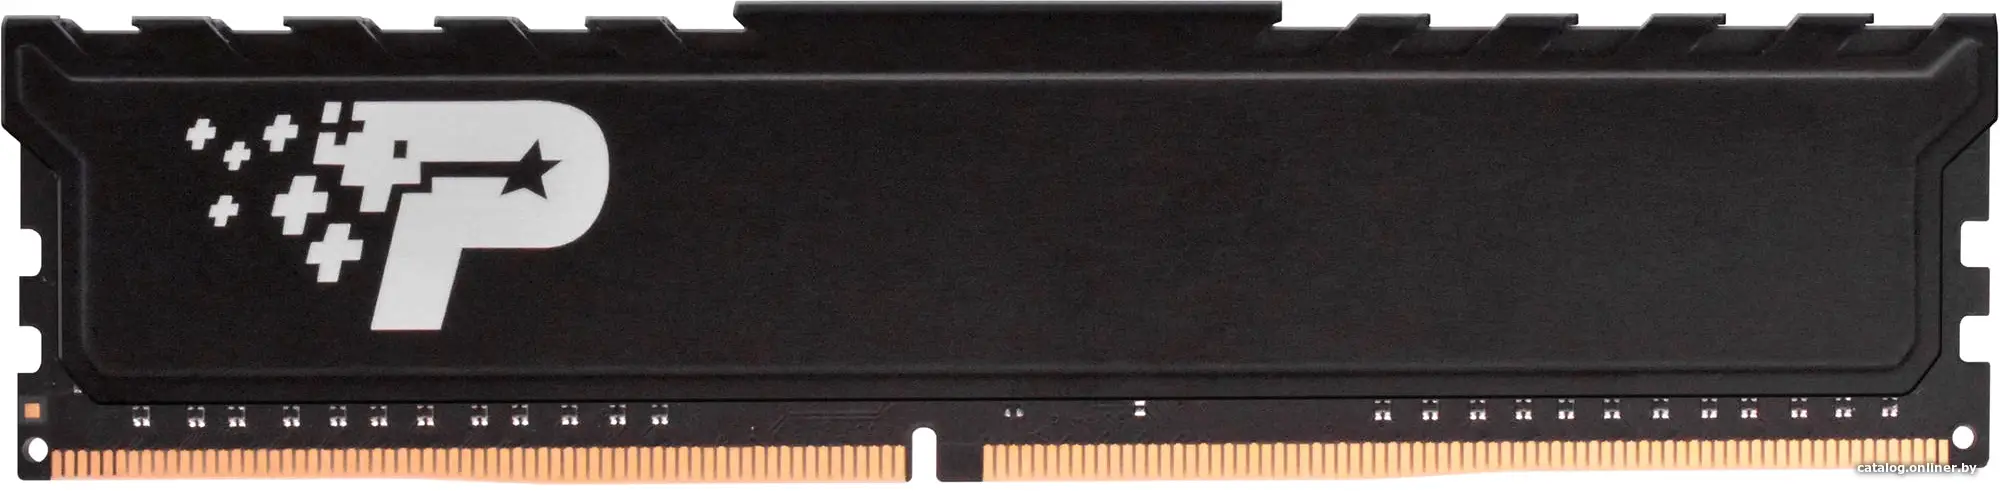 Купить Оперативная память Patriot DDR 4 DIMM 16Gb PC21300 (PSP416G266681H1), цена, опт и розница